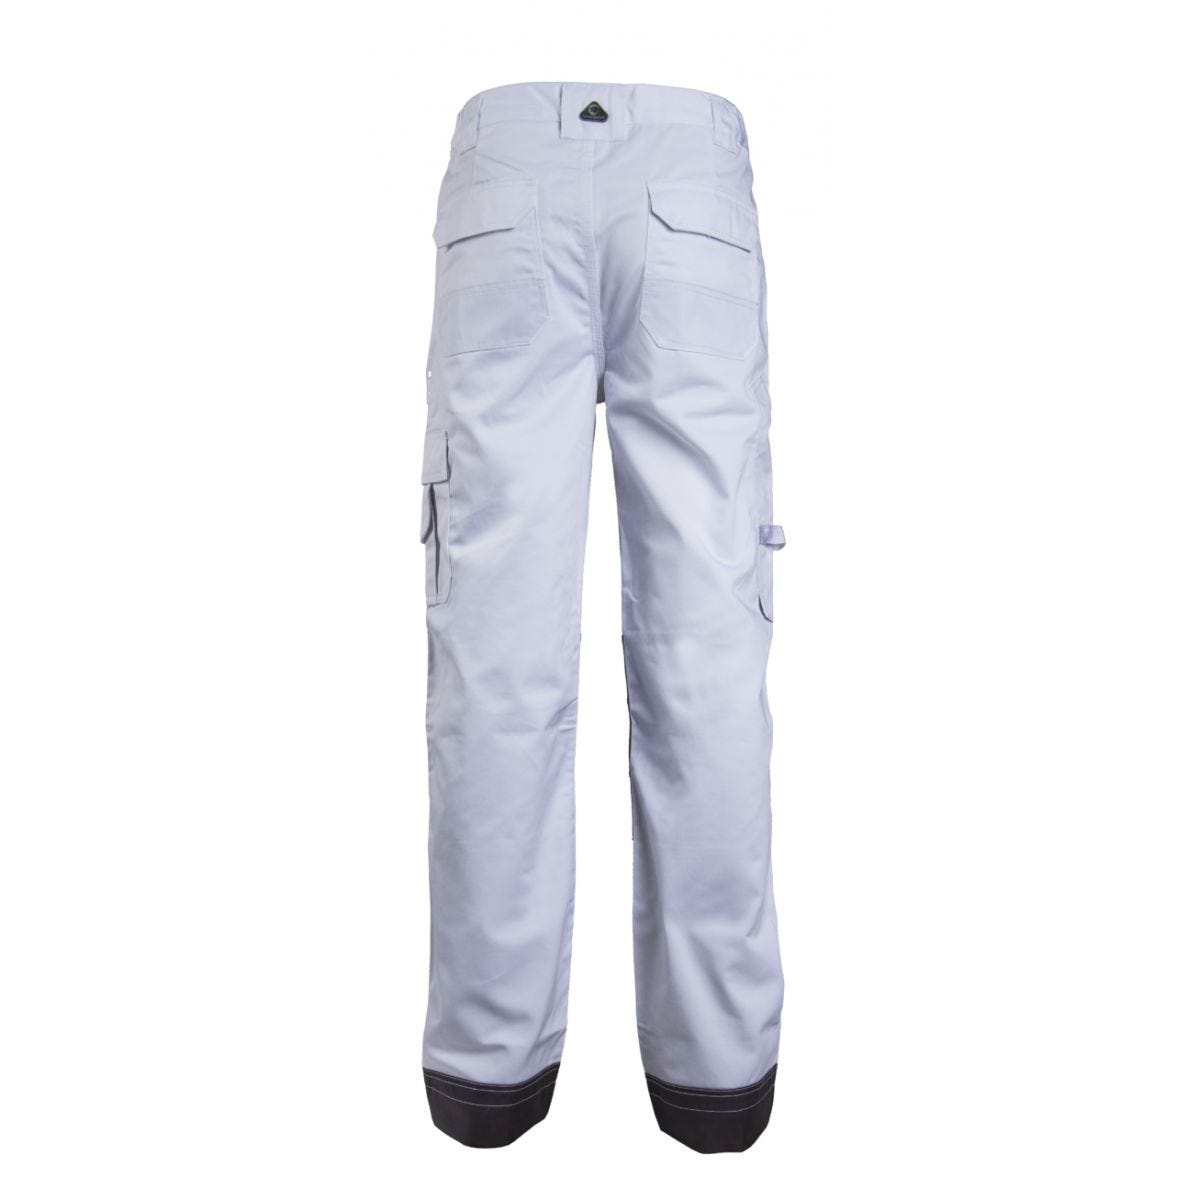 Pantalon CLASS blanc - COVERGUARD - Taille M 1